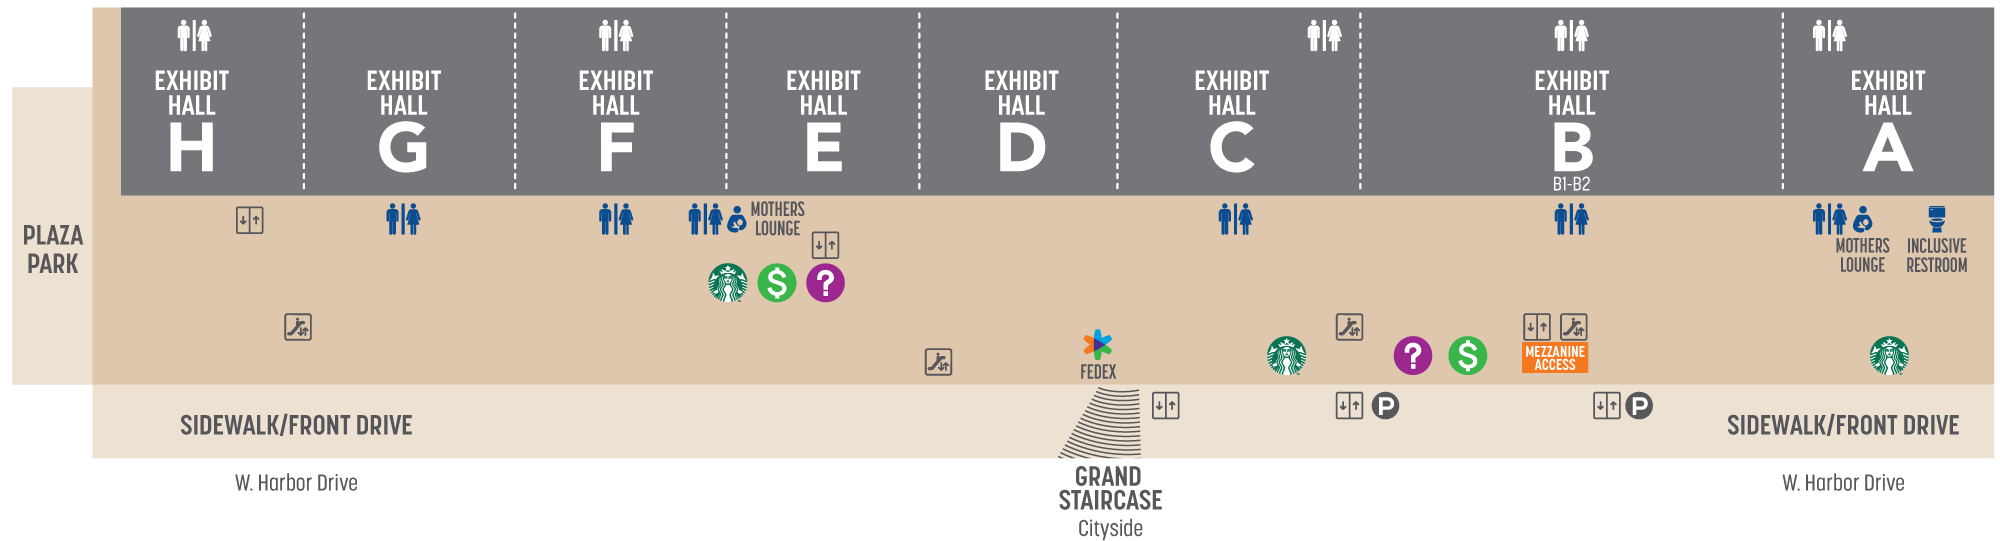 San Diego Convention Center Building Map – Ground Level